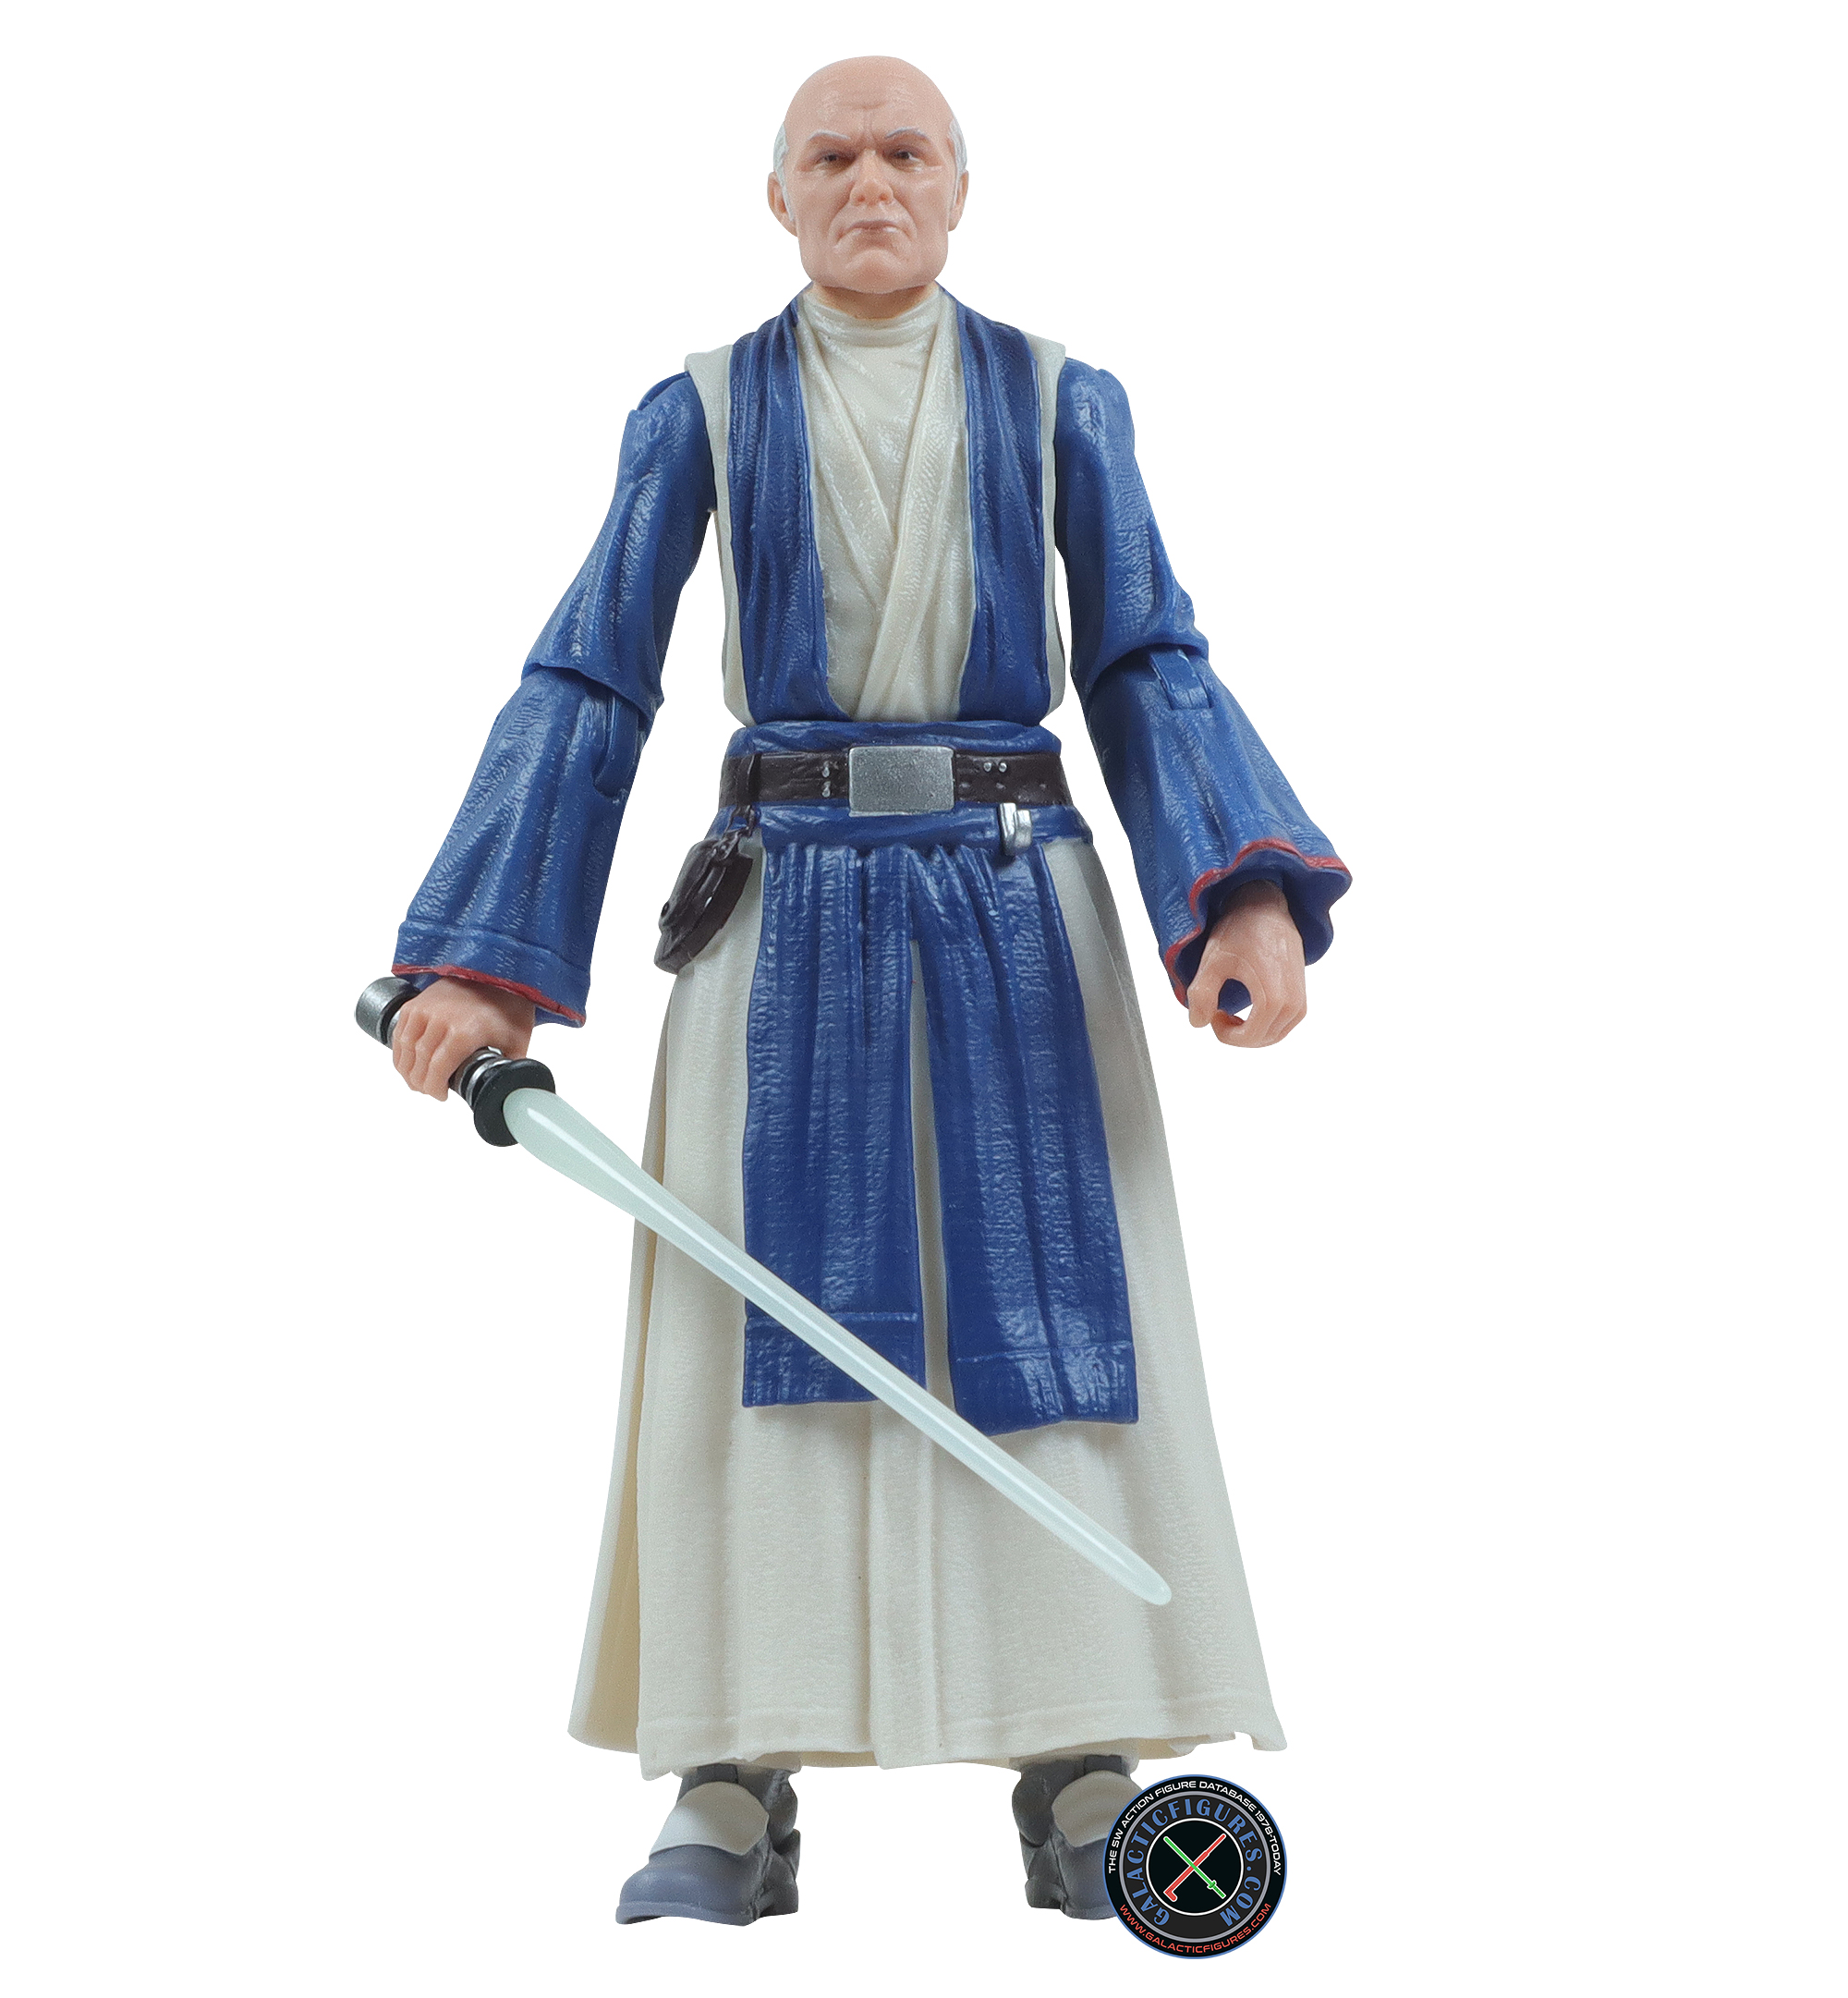 Obi-Wan Kenobi Concept Art Edition 2-Pack